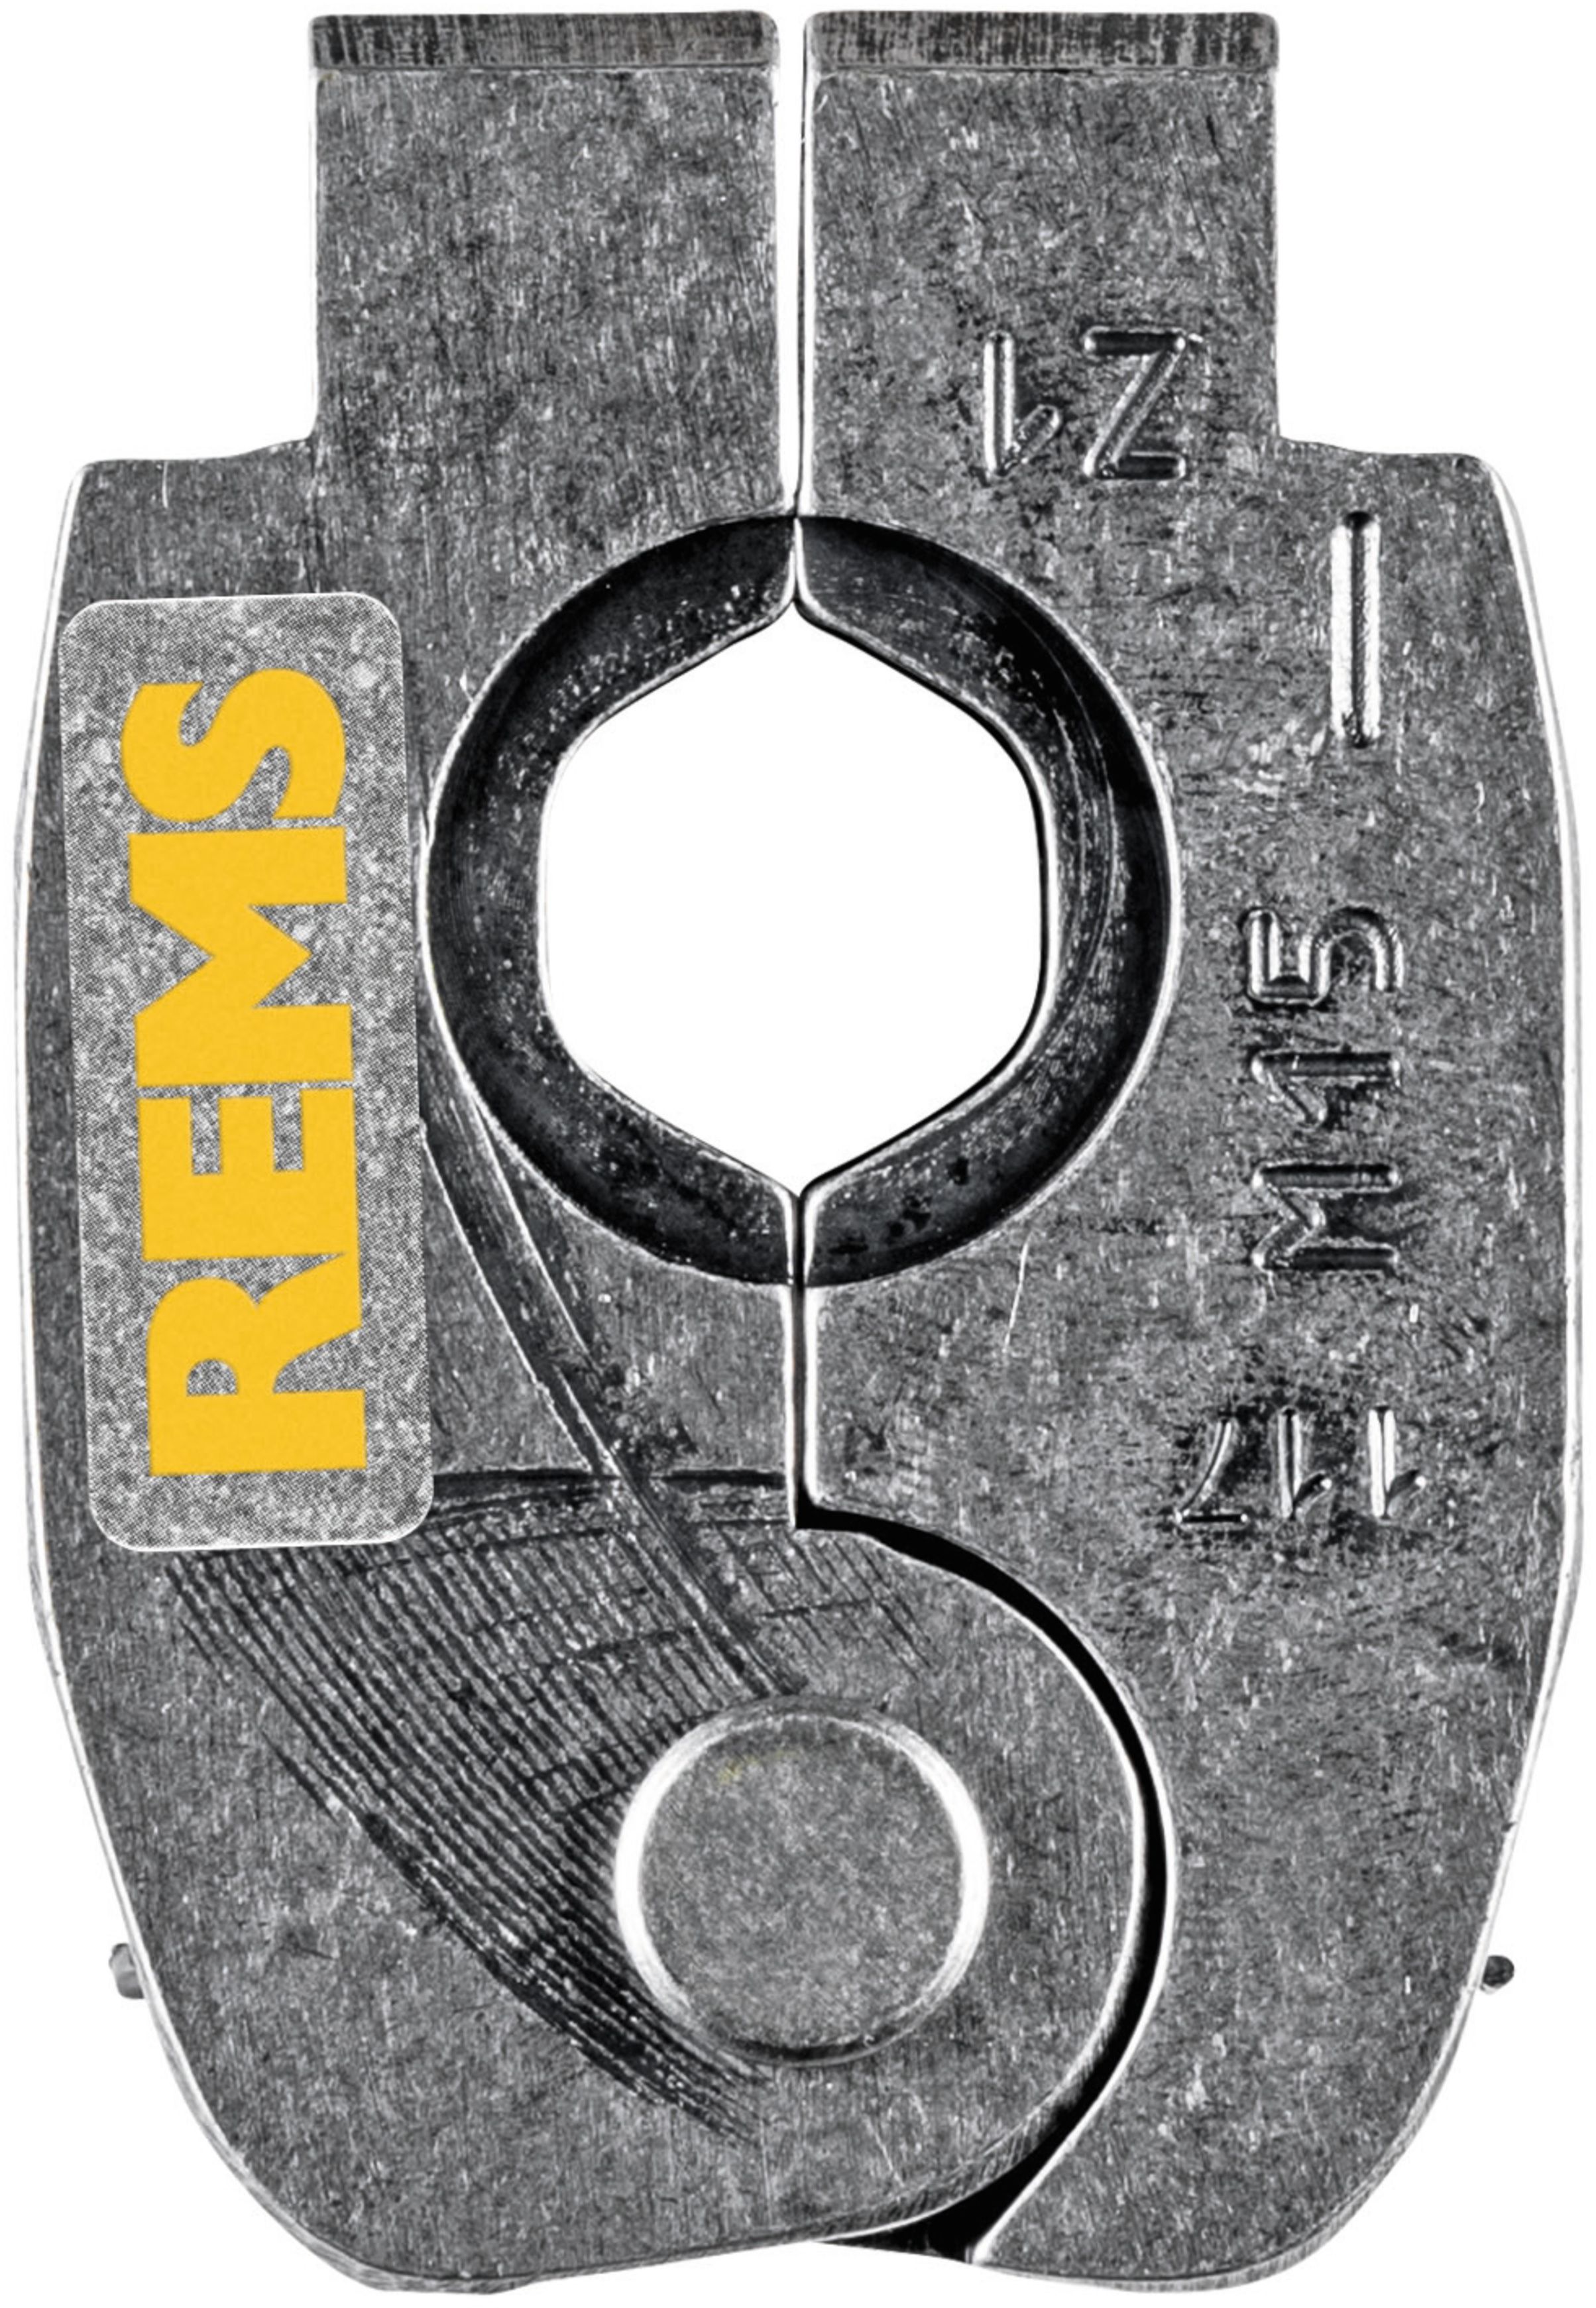 REMS PRESSRING M 28 45° (PR-2B) 574528 R, für Mini-Press ACC - Sanitärwerkzeuge